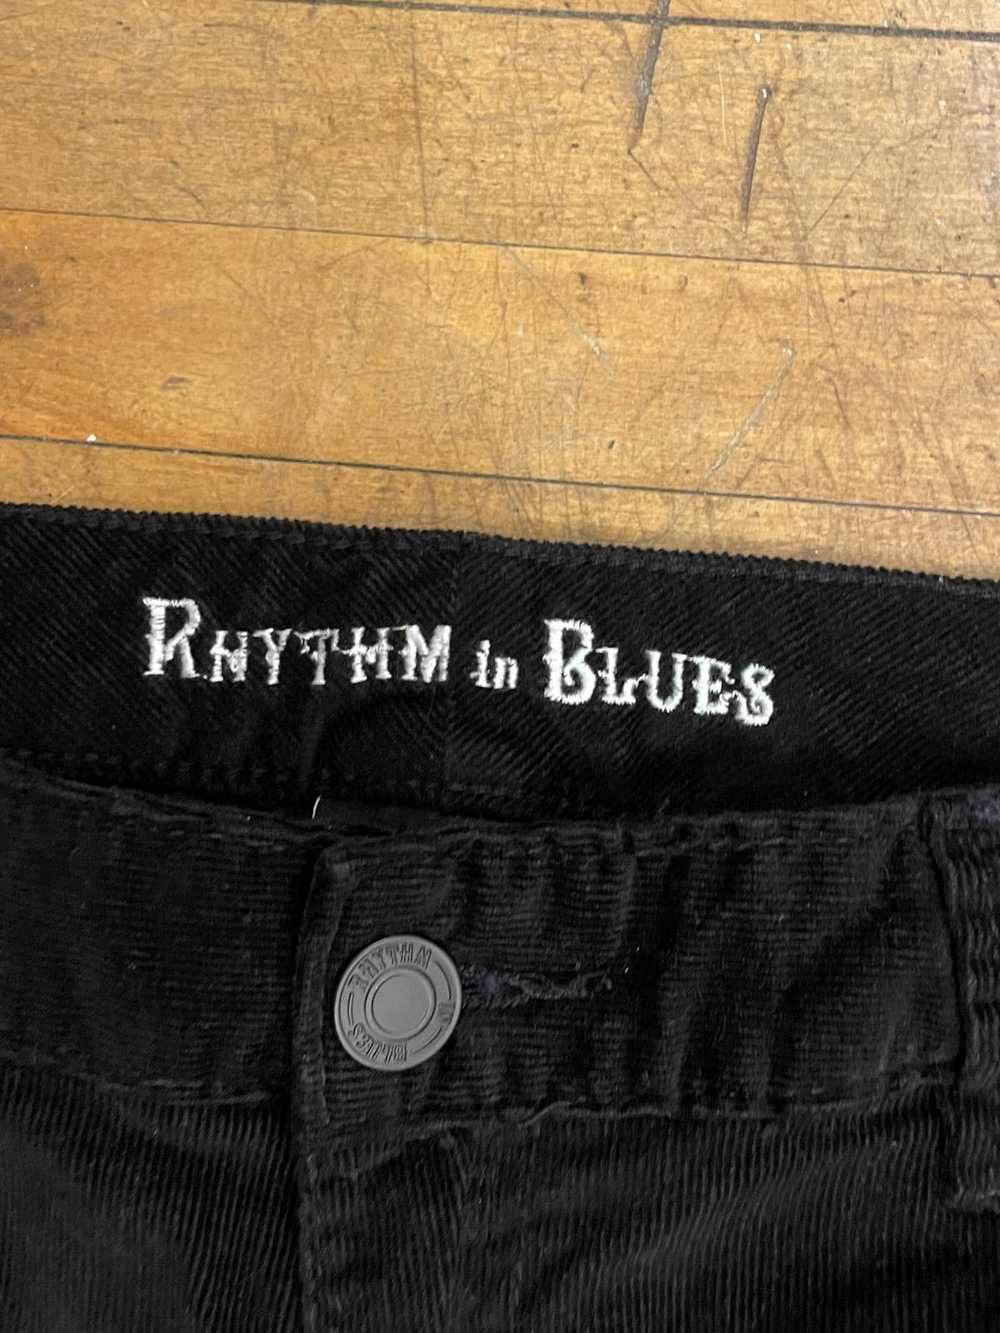 Designer Rhythm in Blues, Black Corduroy Jeans/ C… - image 3